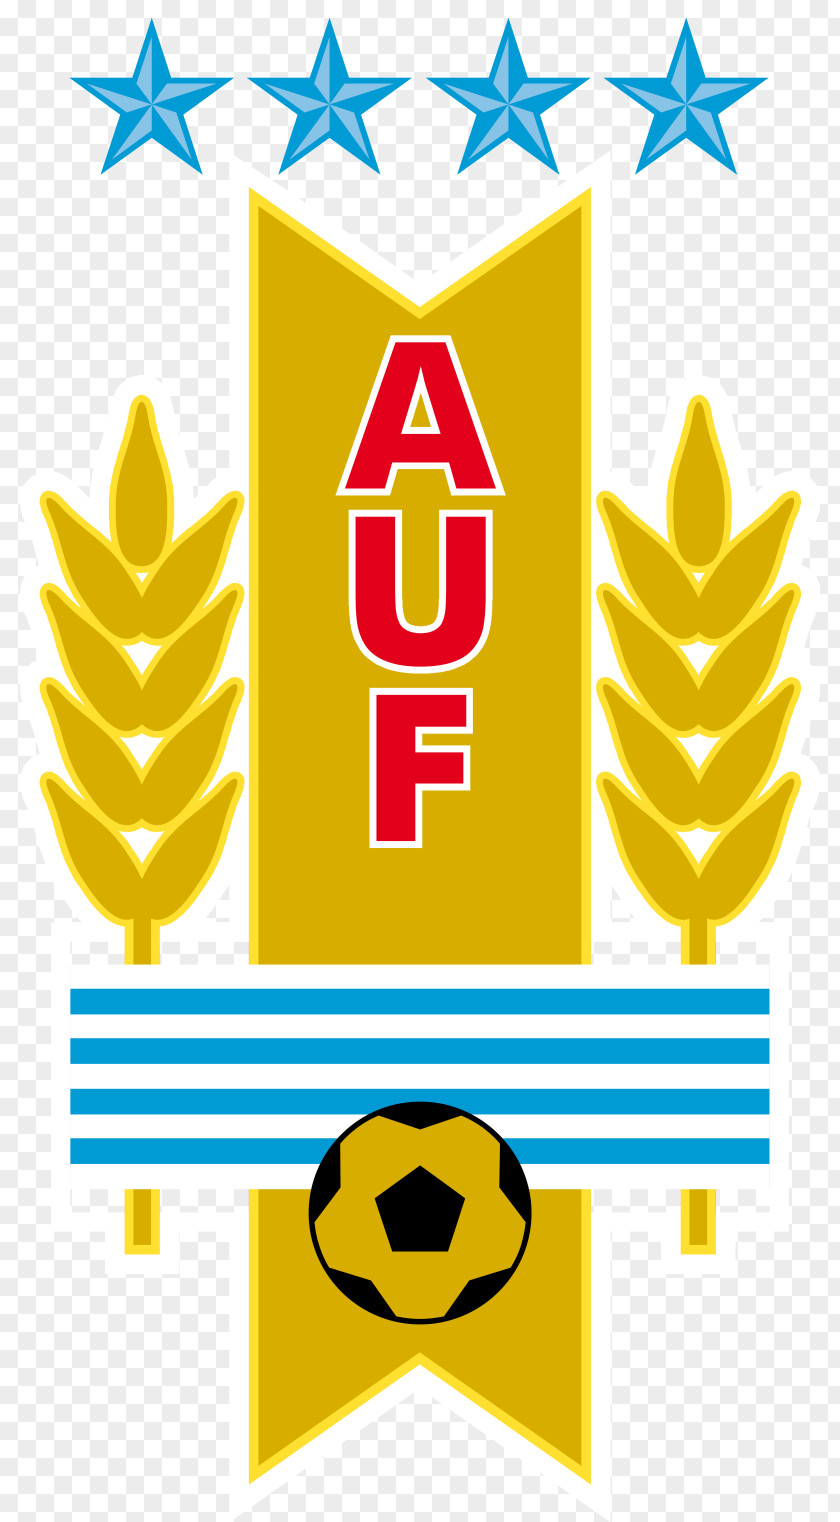 Football Uruguay National Team 1930 FIFA World Cup Bolivia Spain Uruguayan Association PNG